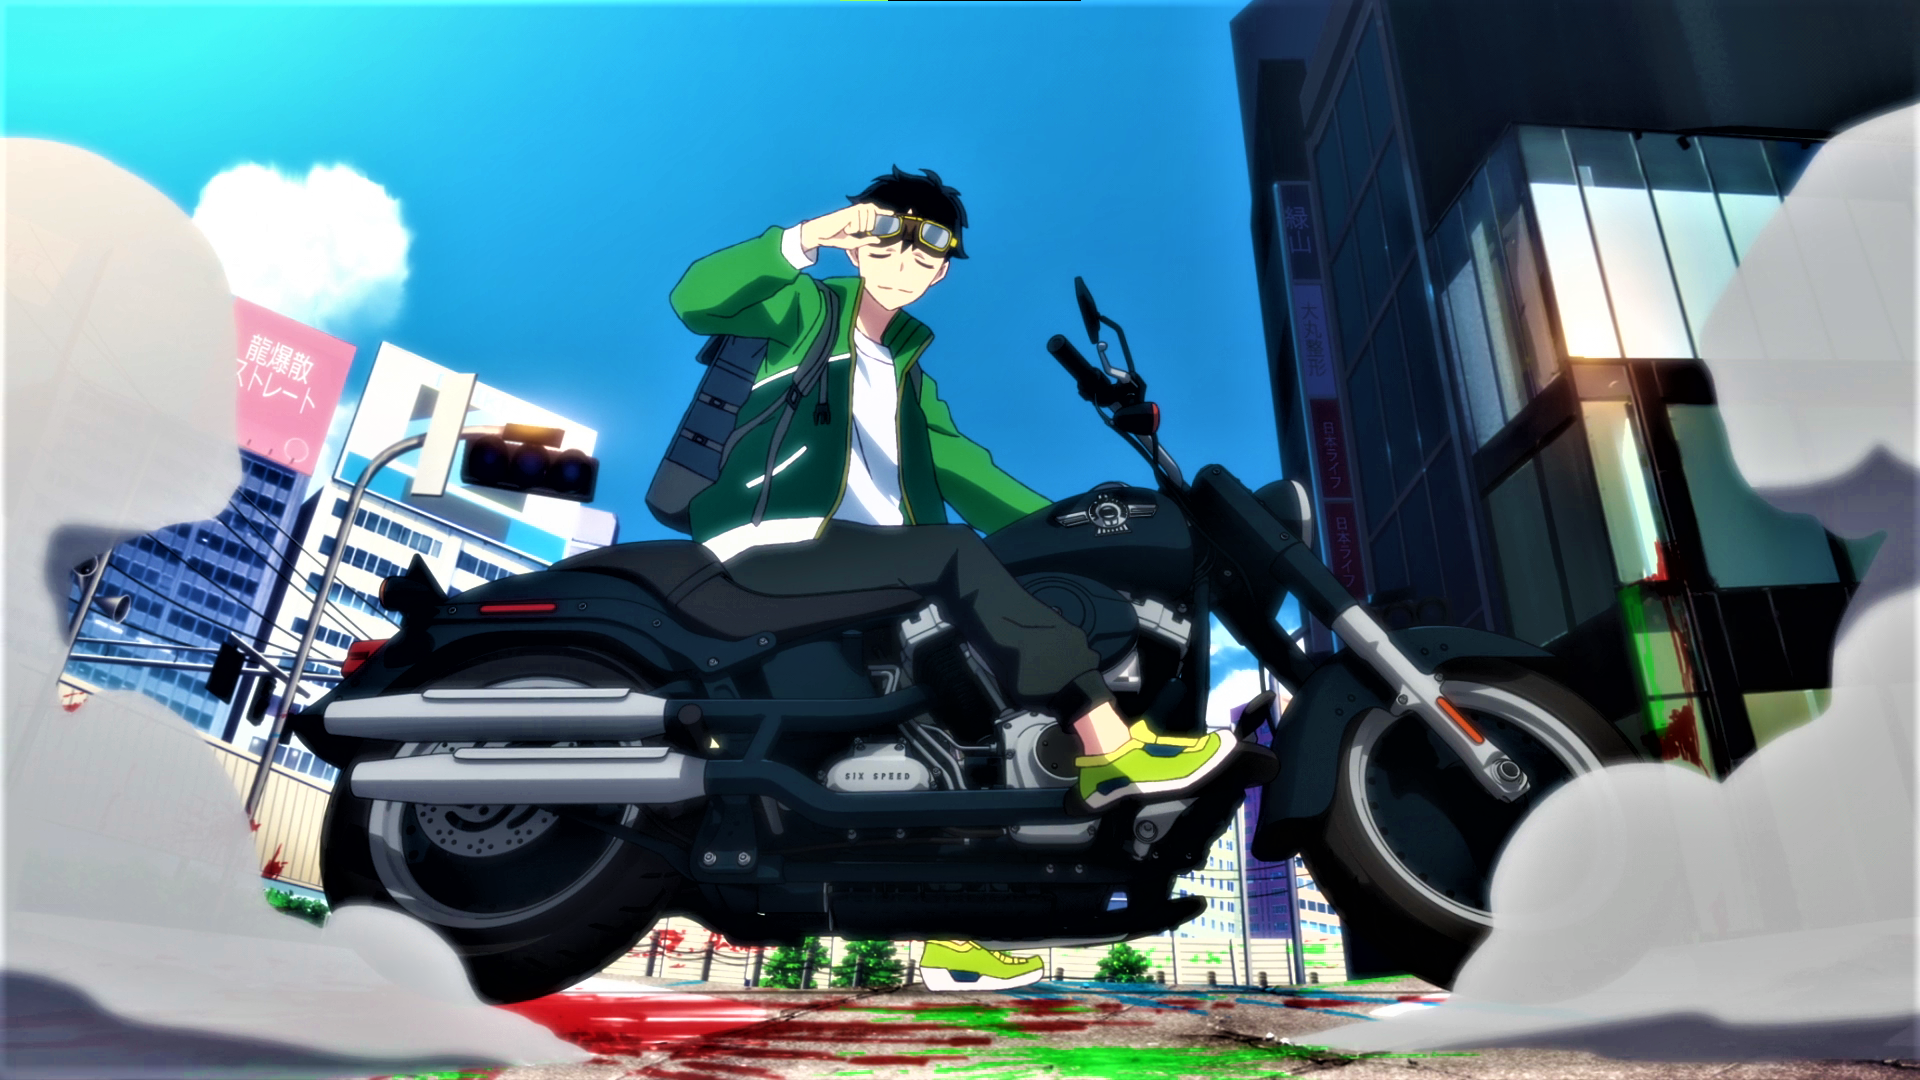 Anime 1920x1080 Zom 100: Bucket List of the Dead Akira Tendou motorcycle smoke sky clouds building smiling anime Anime screenshot anime boys closed eyes vehicle sunlight jacket